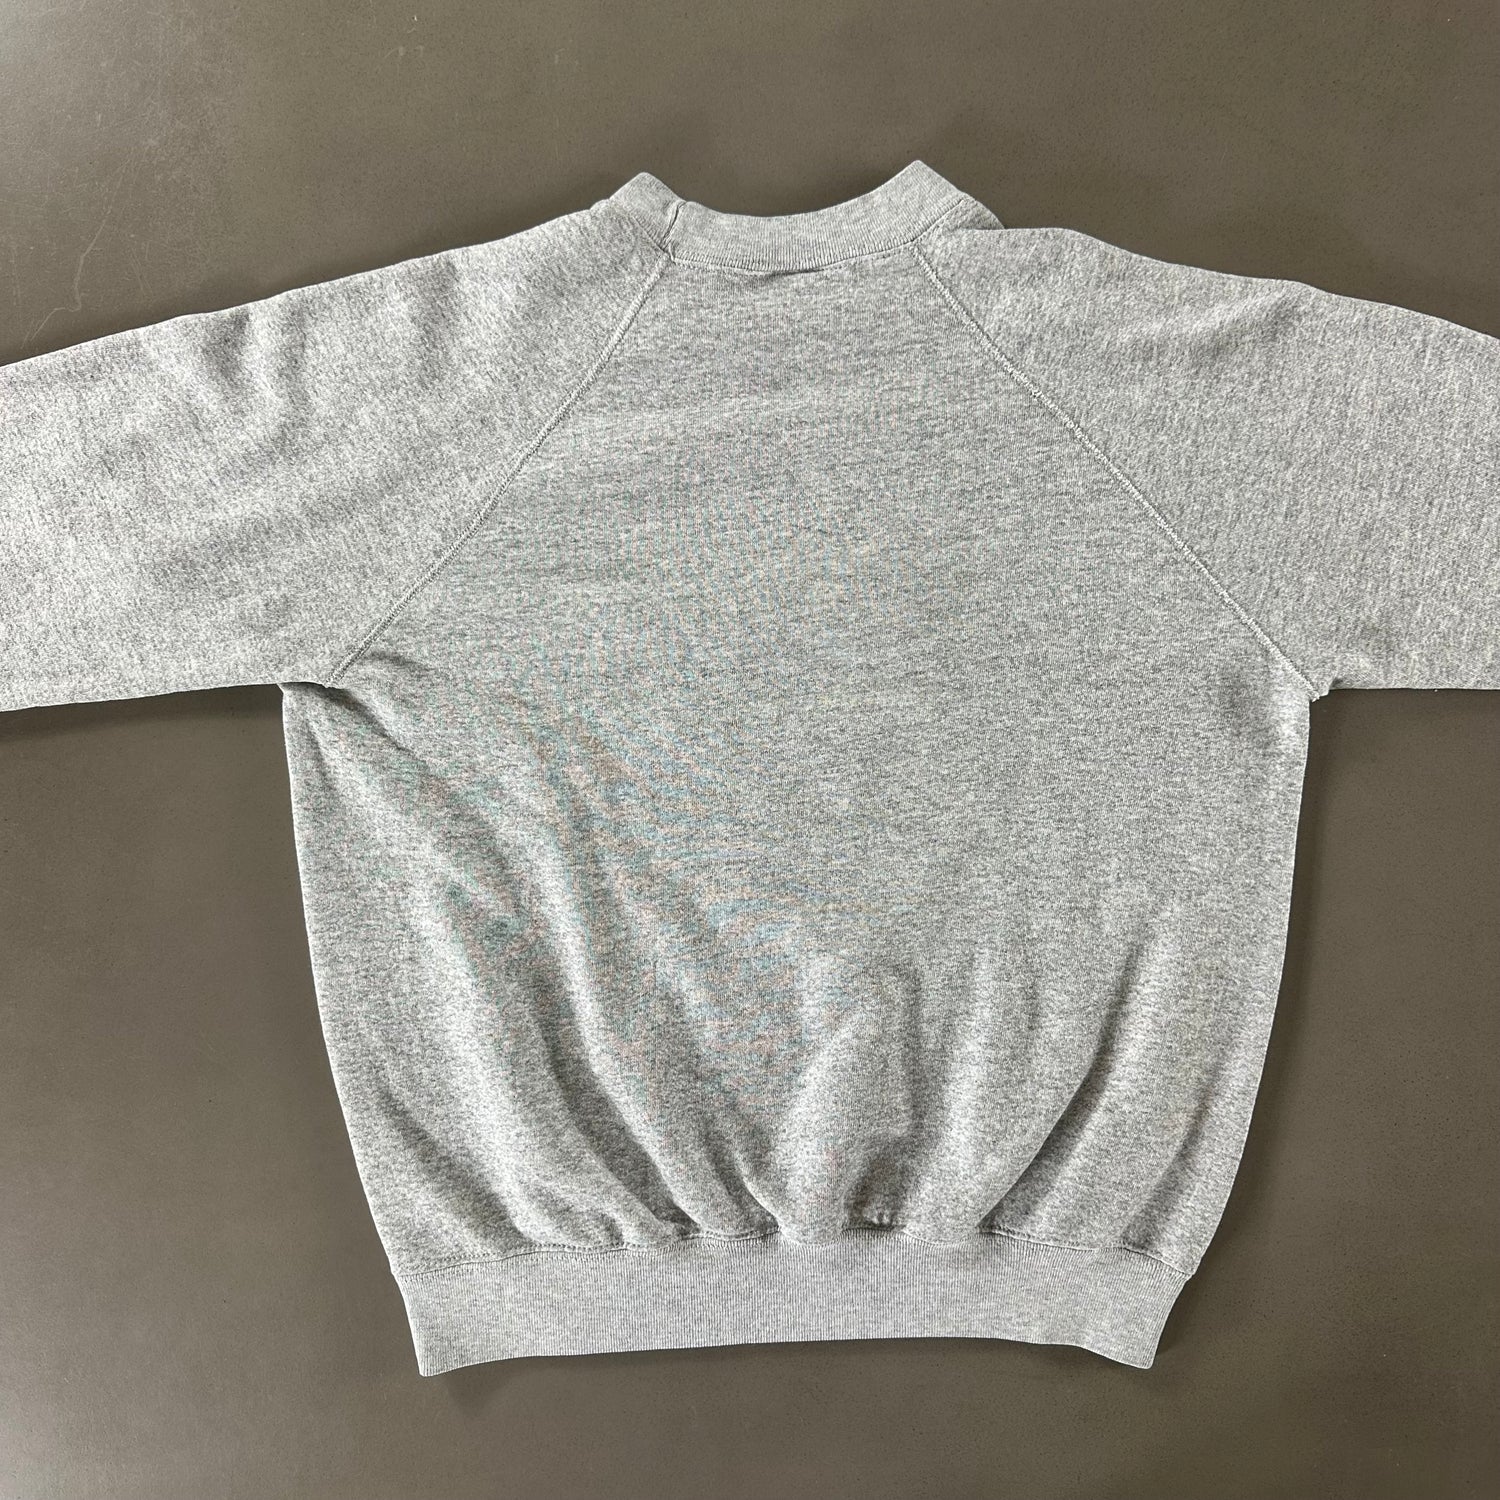 Vintage 1980s South Haven Sweatshirt size XL